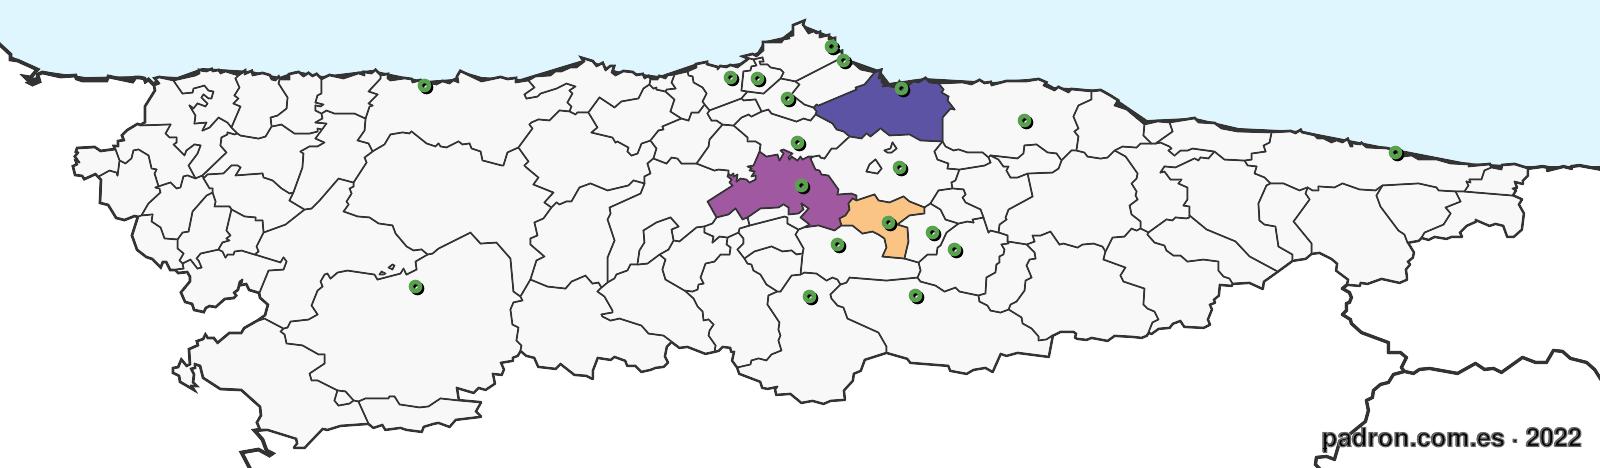 georgianos en asturias.